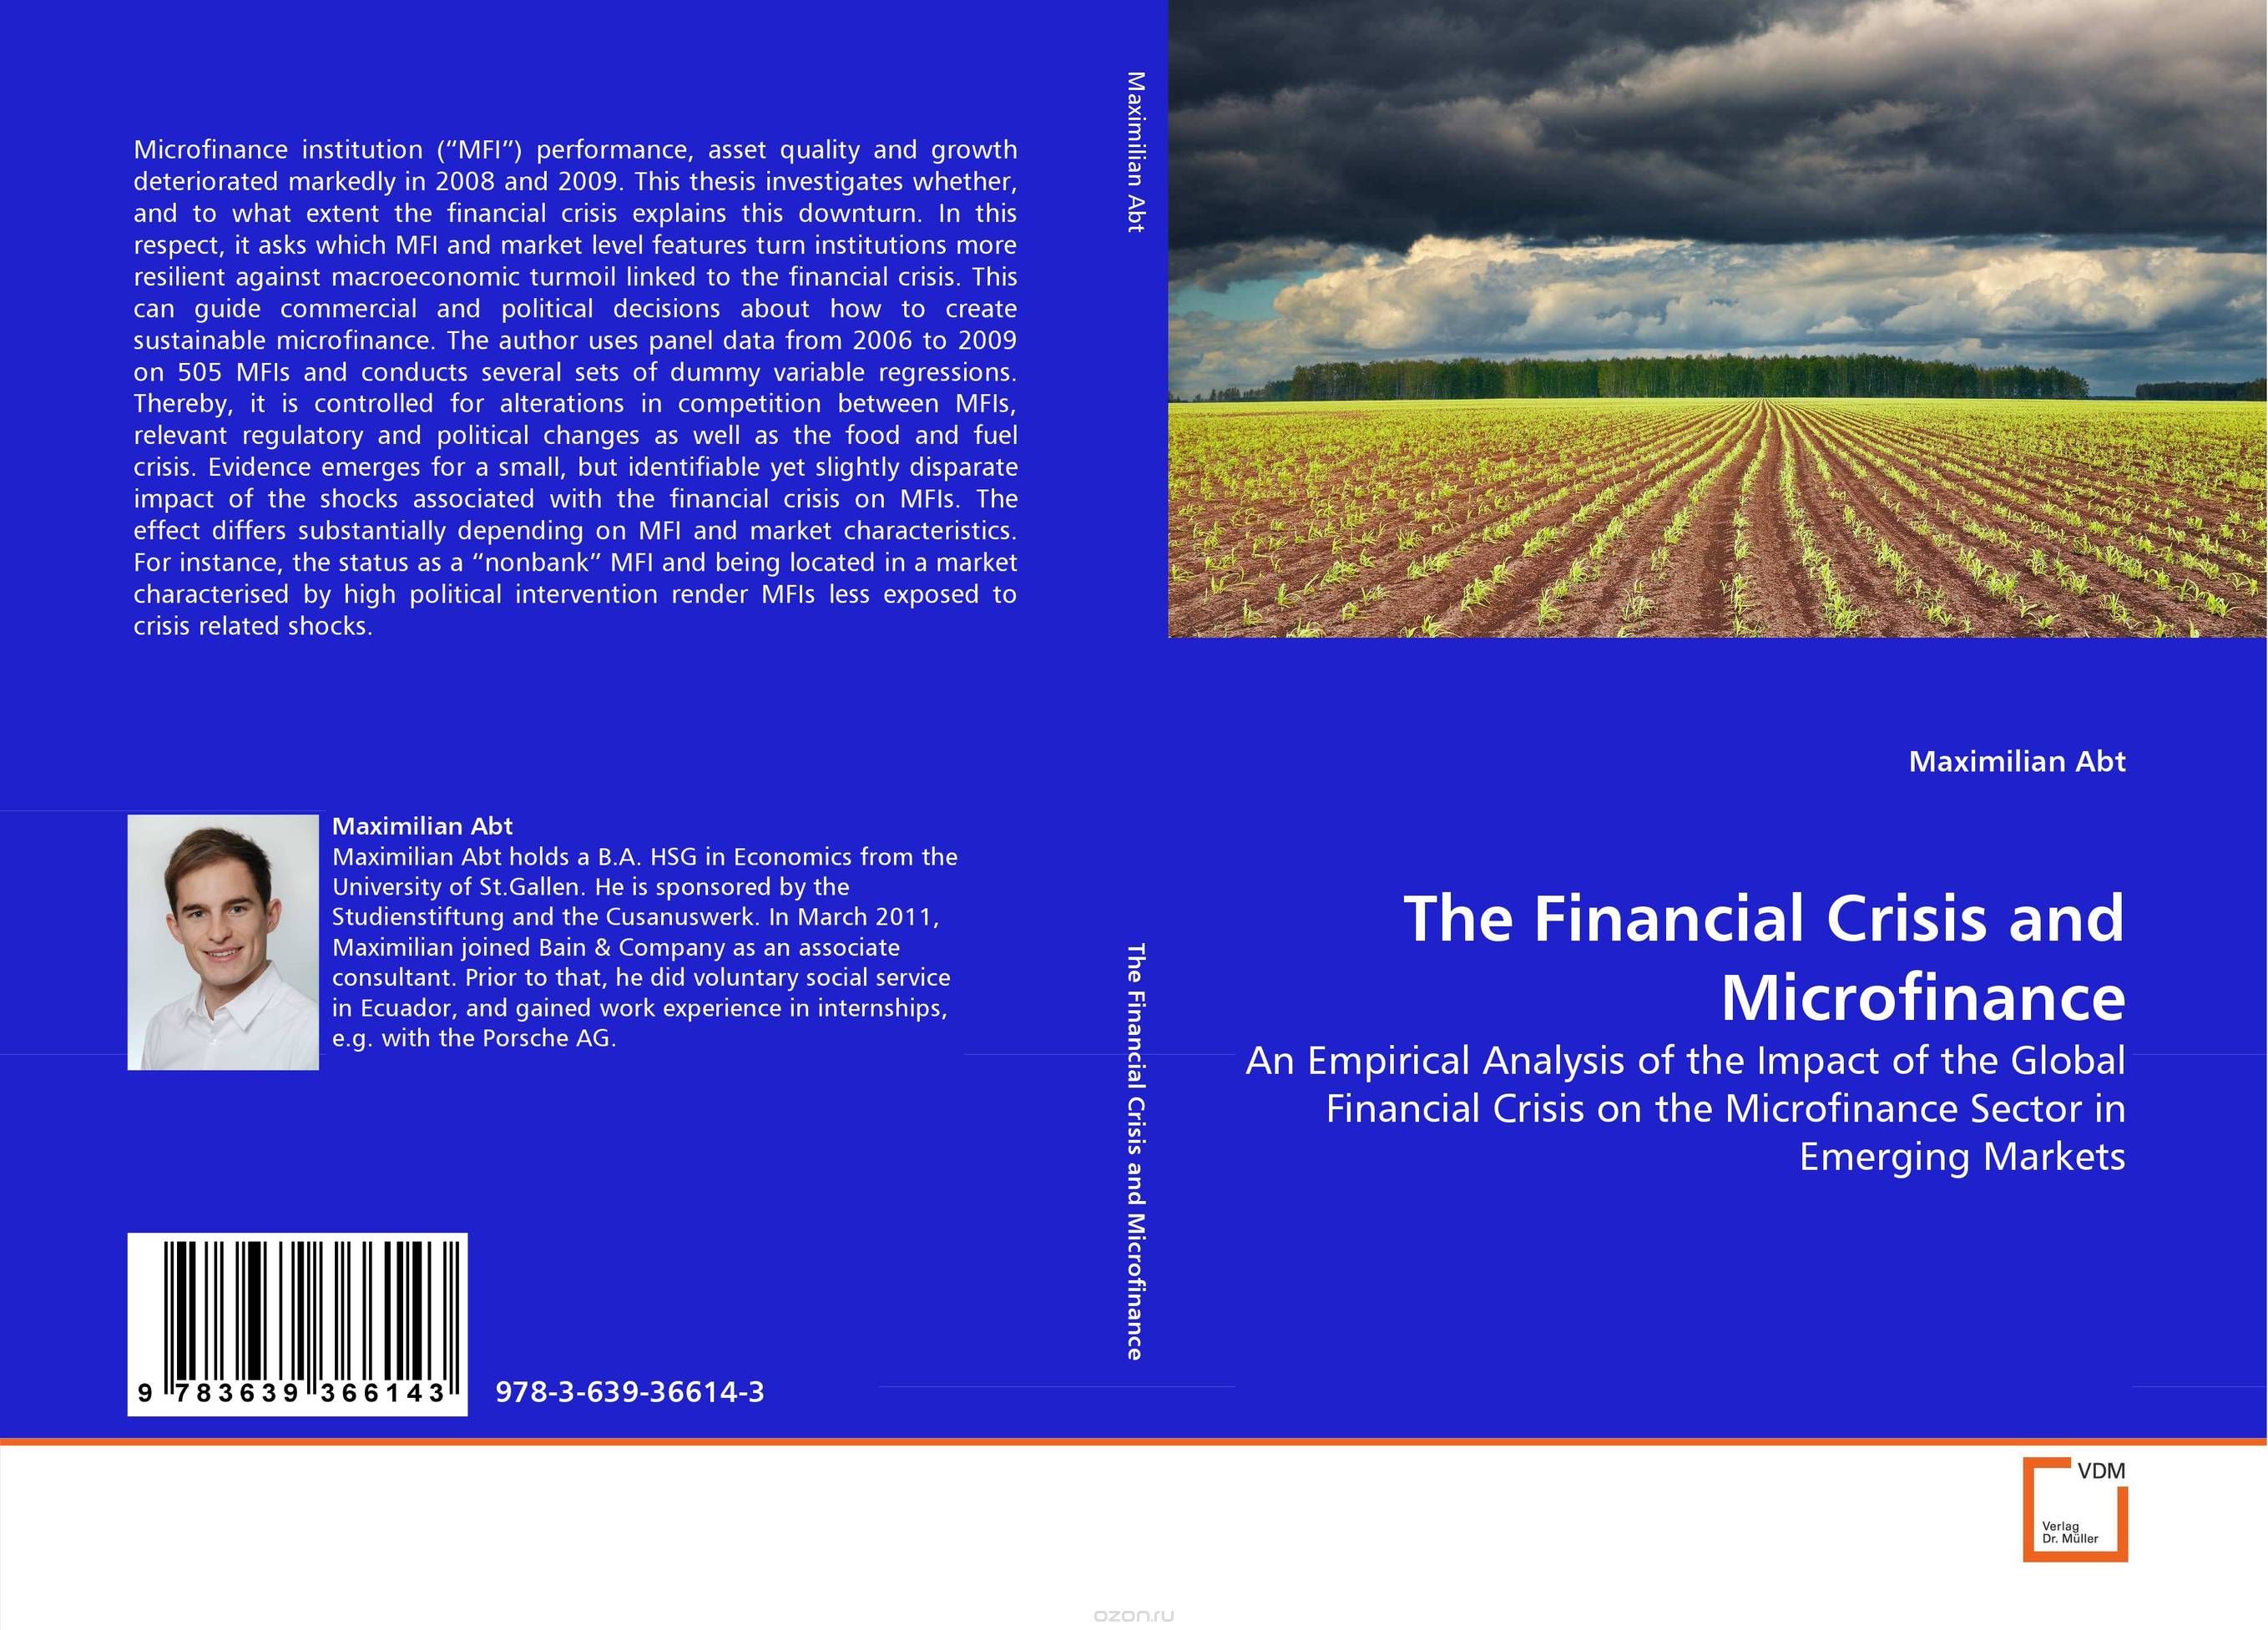 Скачать книгу "The Financial Crisis and Microfinance"